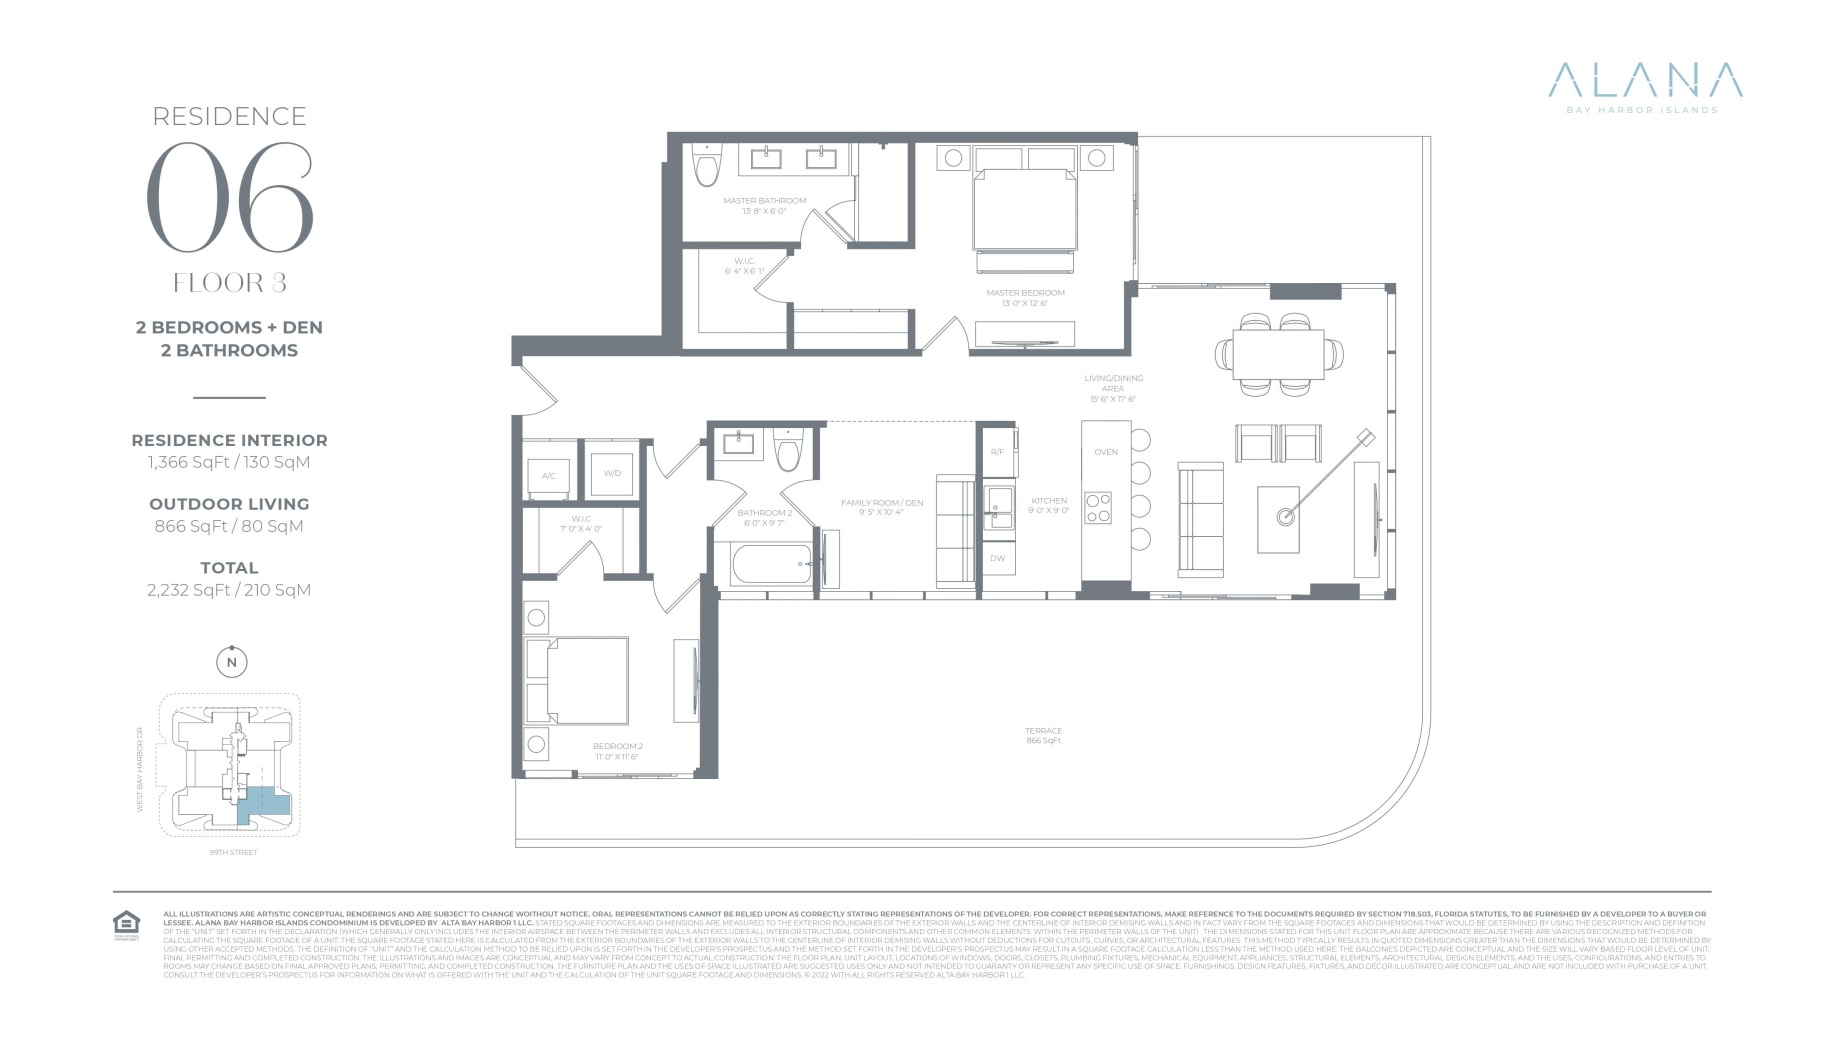 Alana_Floorplan_Residence06_floor3_2bed+den_2bath